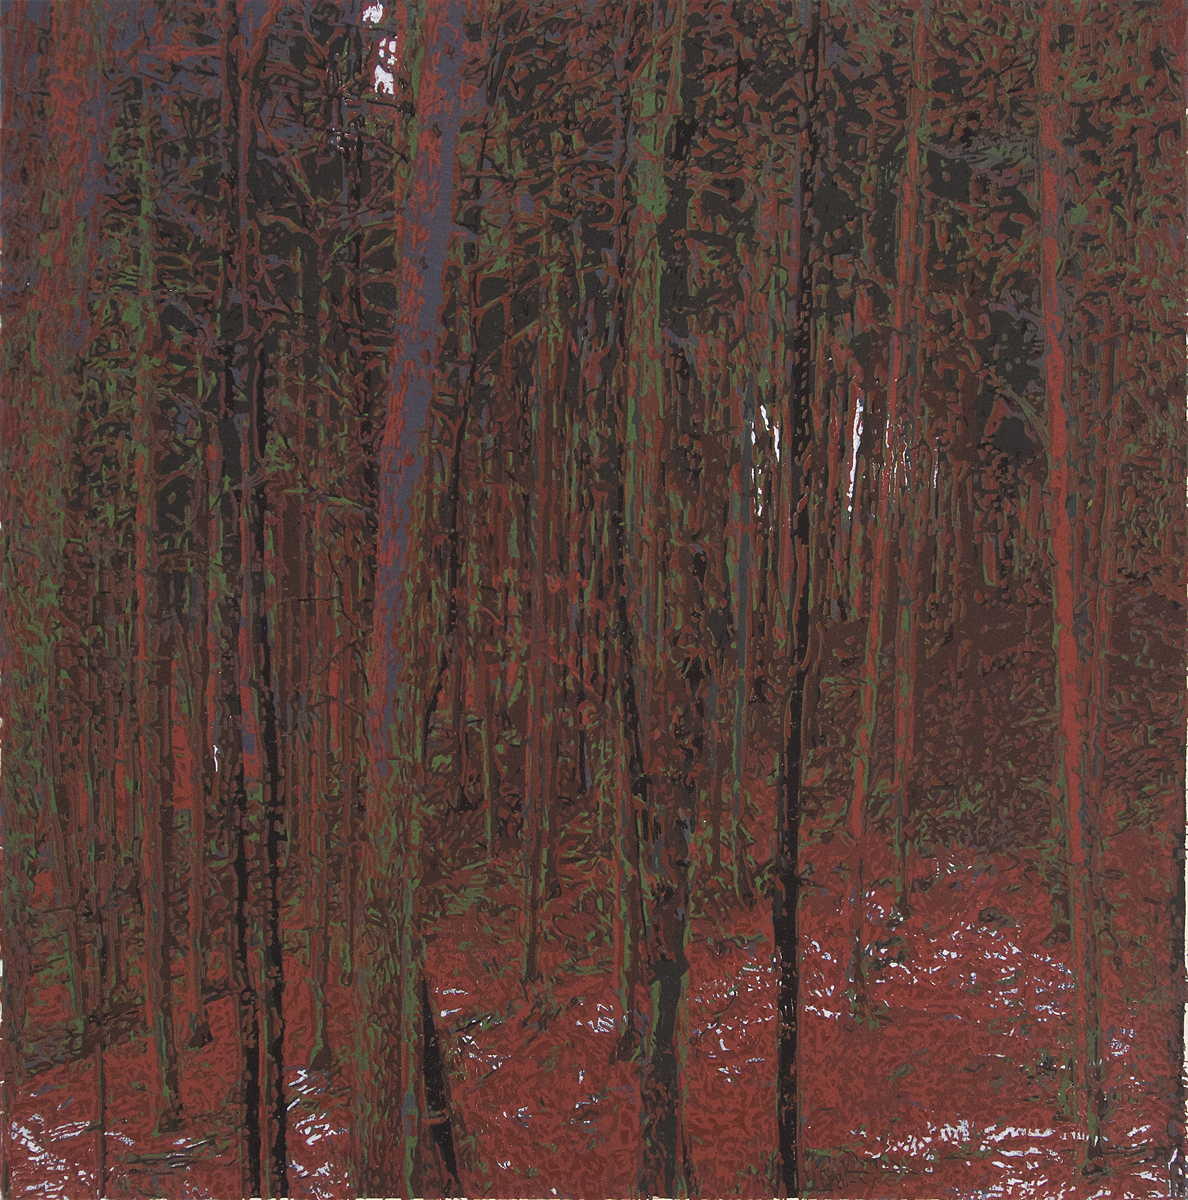 Wald, 2012 - 2015